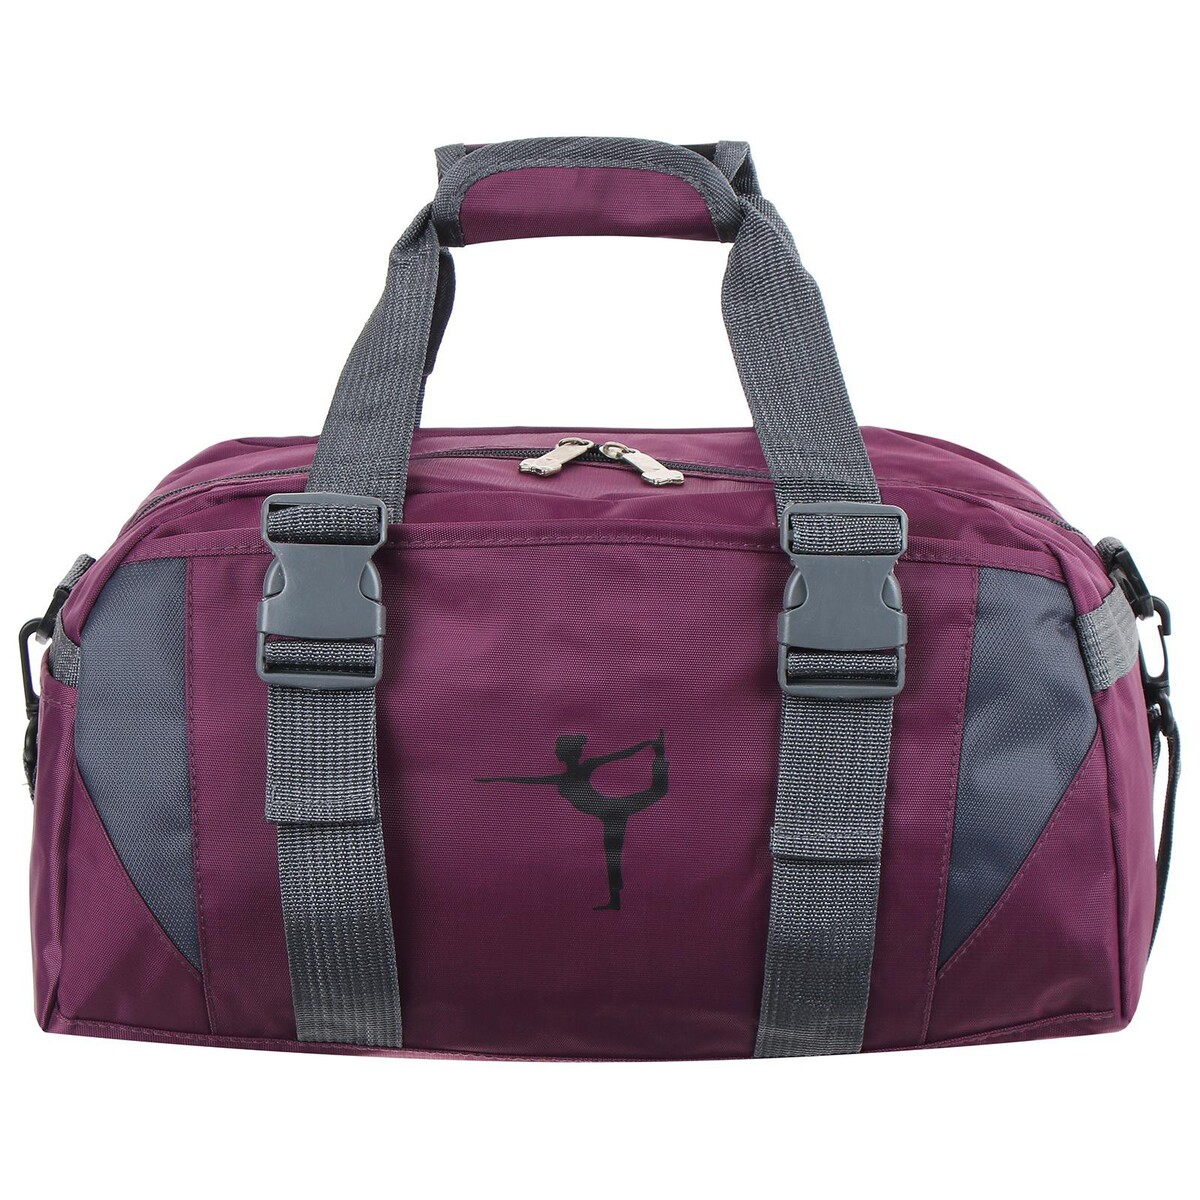 Сумка для йоги и гимнастики sangh, 37х20х20 см, цвет фиолетовый сумка для йоги и гимнастики sangh 37х20х20 см фиолетовый